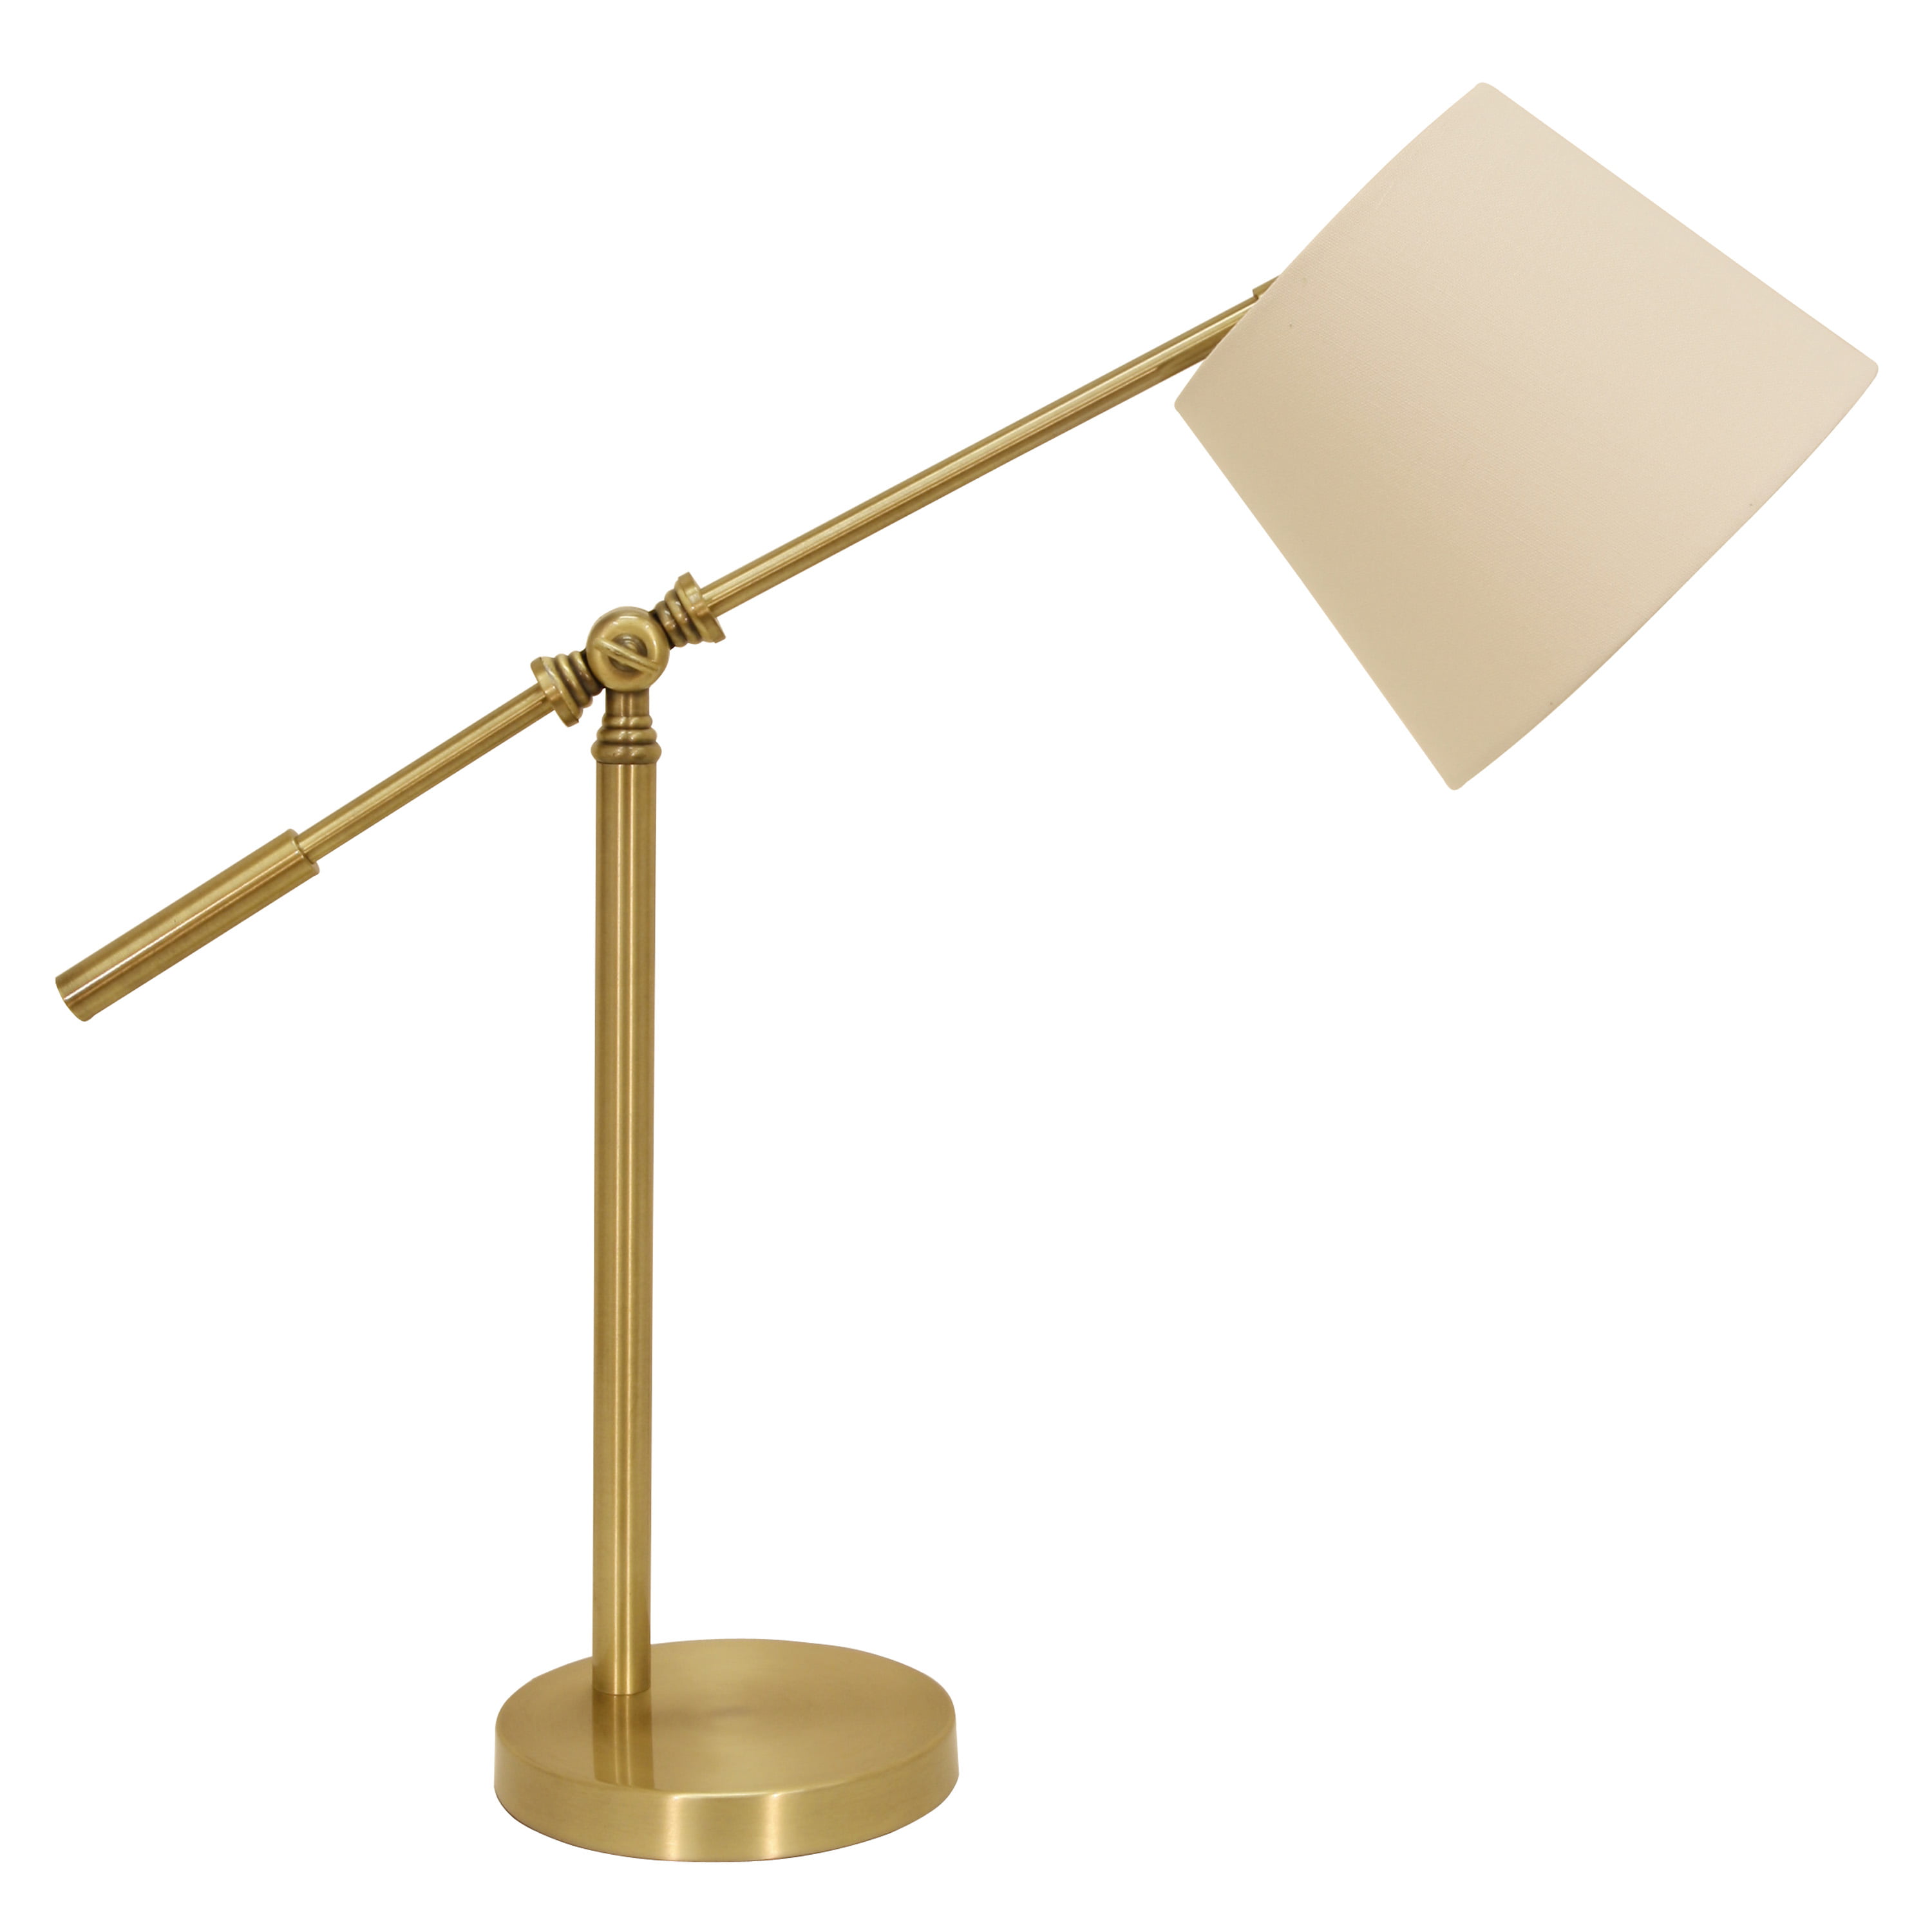 Adjustable Arm Table Lamp - Walmart.com